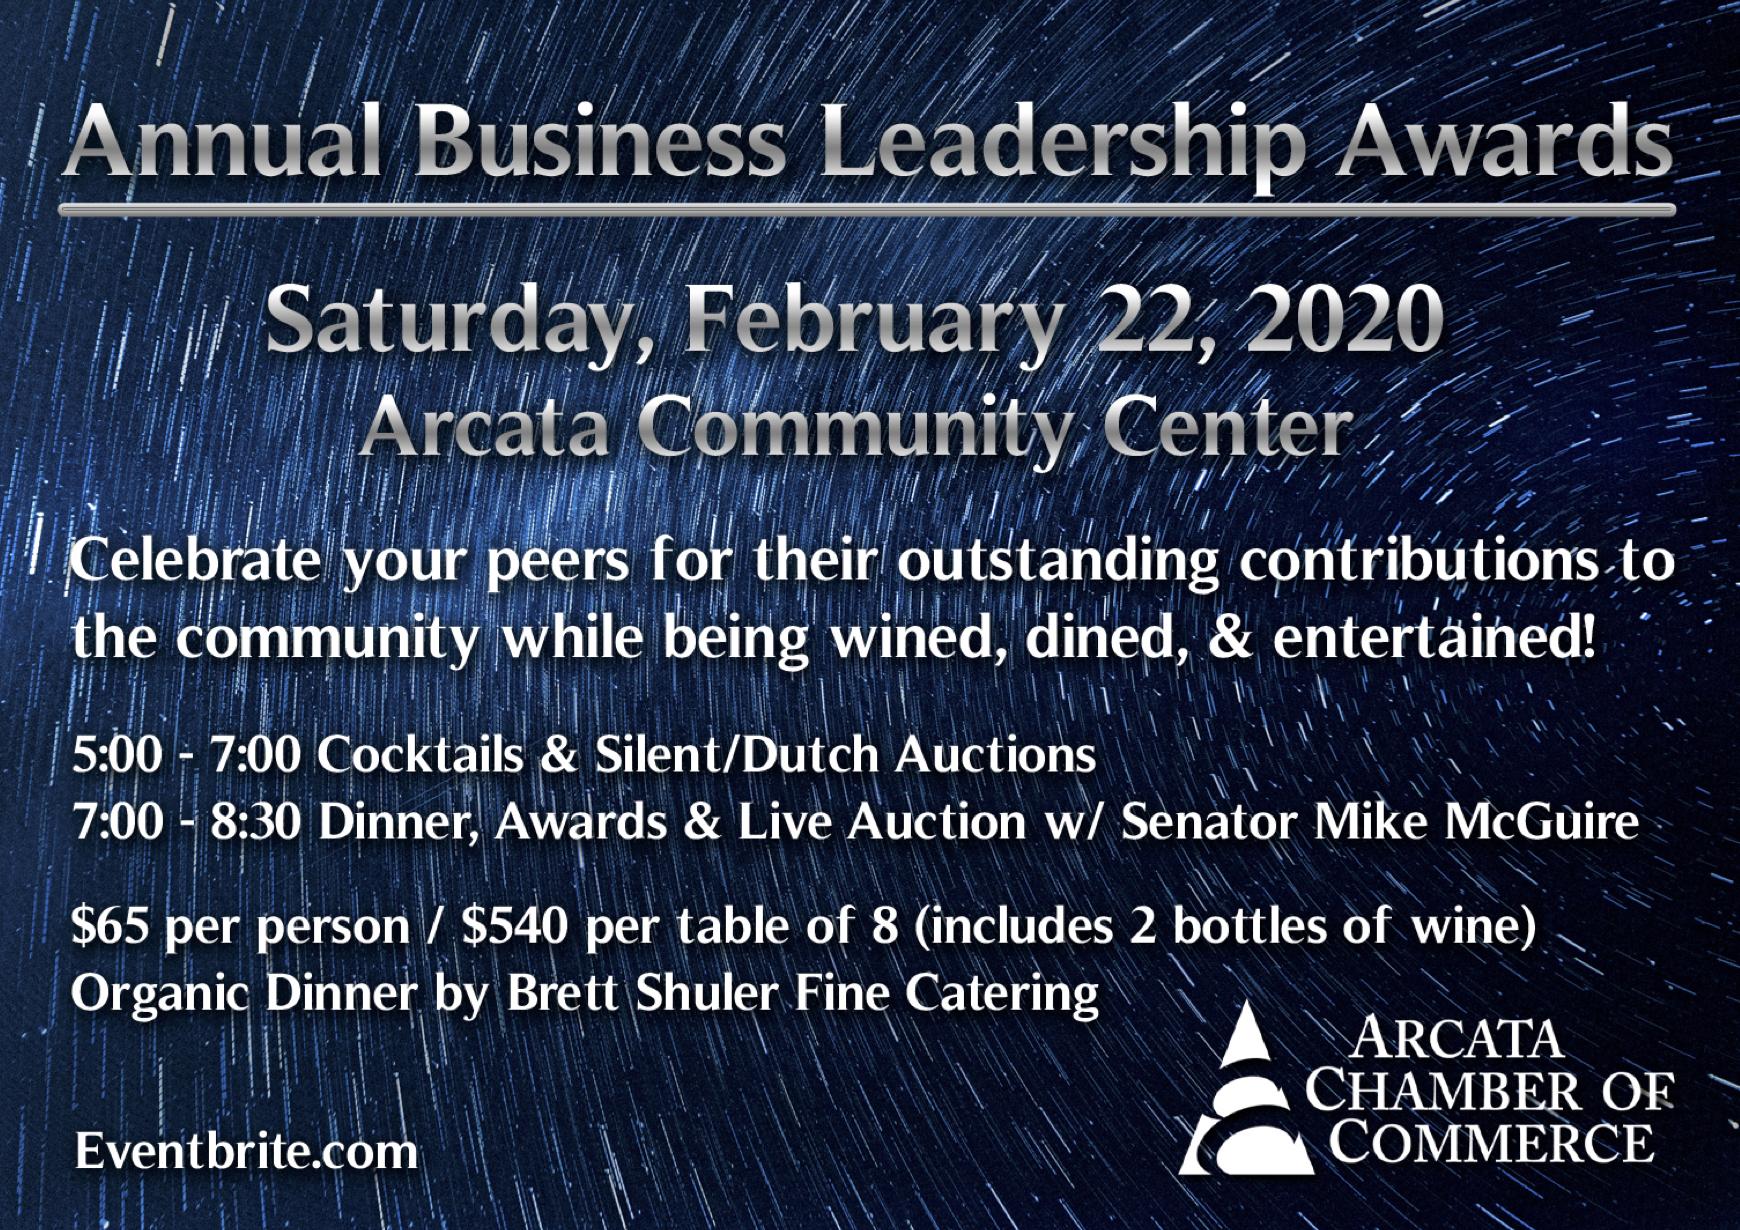 Arcata's Annual Business Leadership Awards